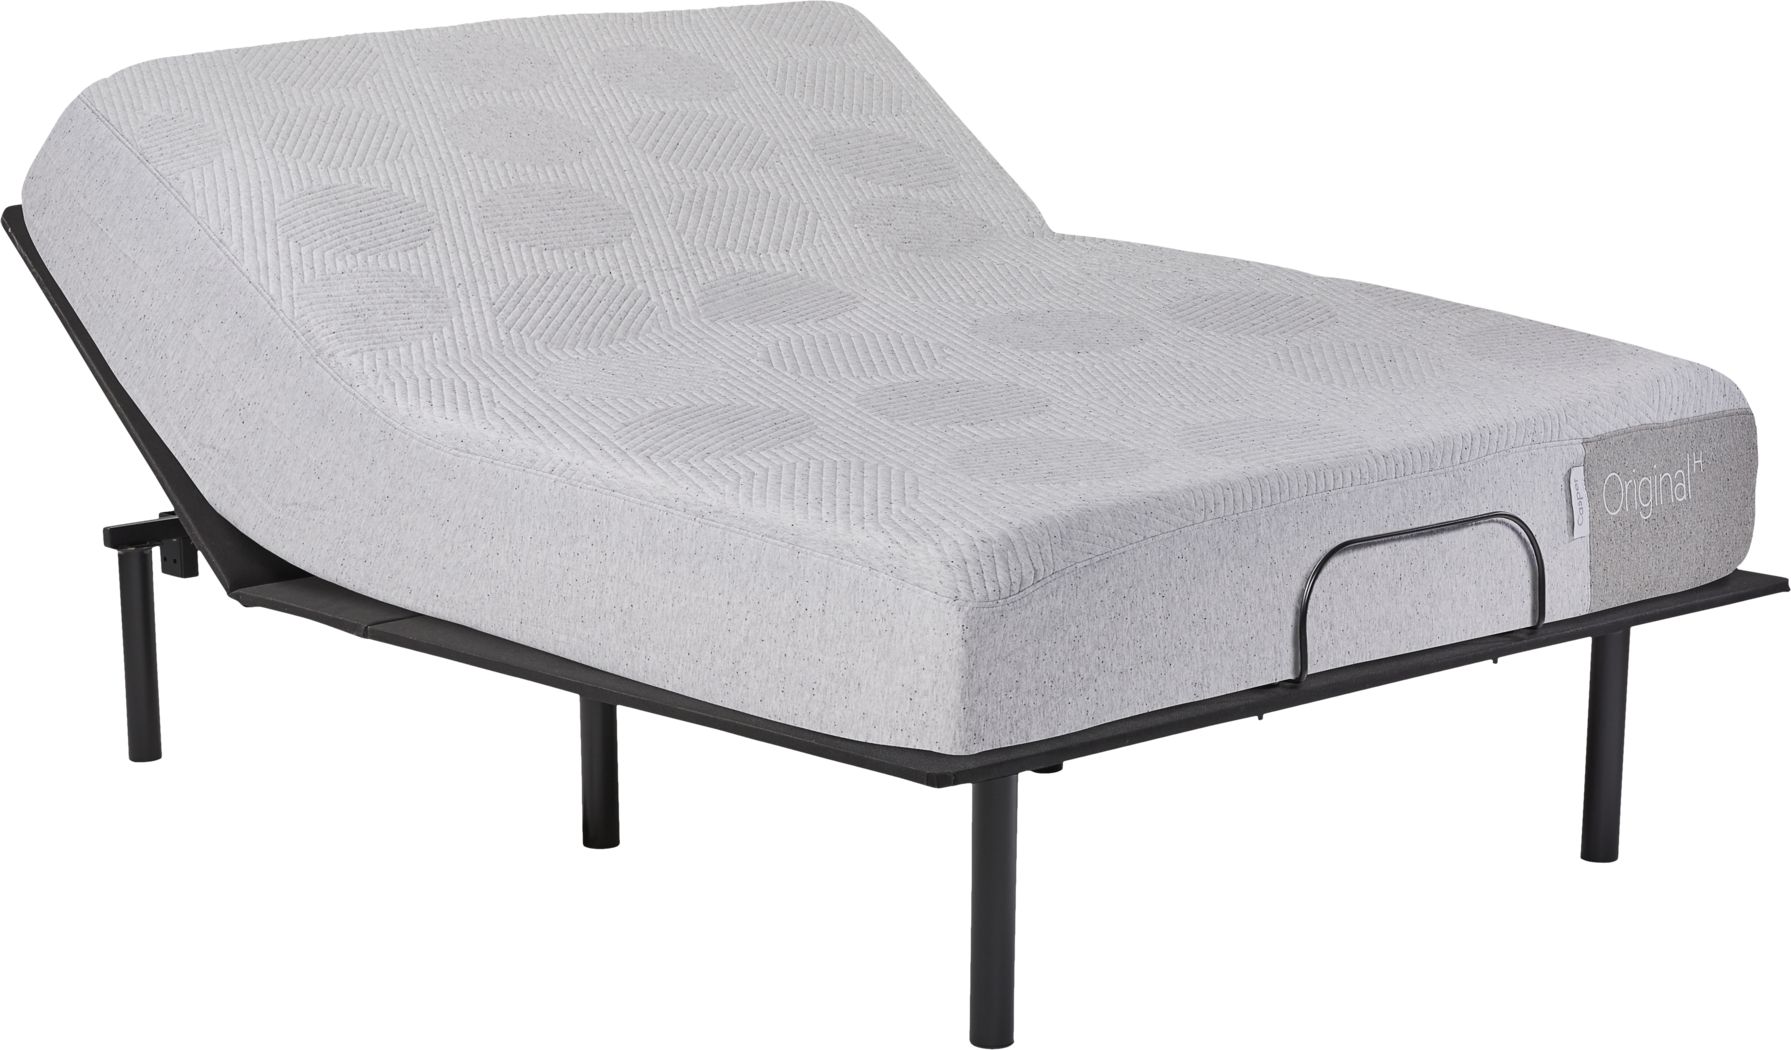 casper original hybrid king size mattress